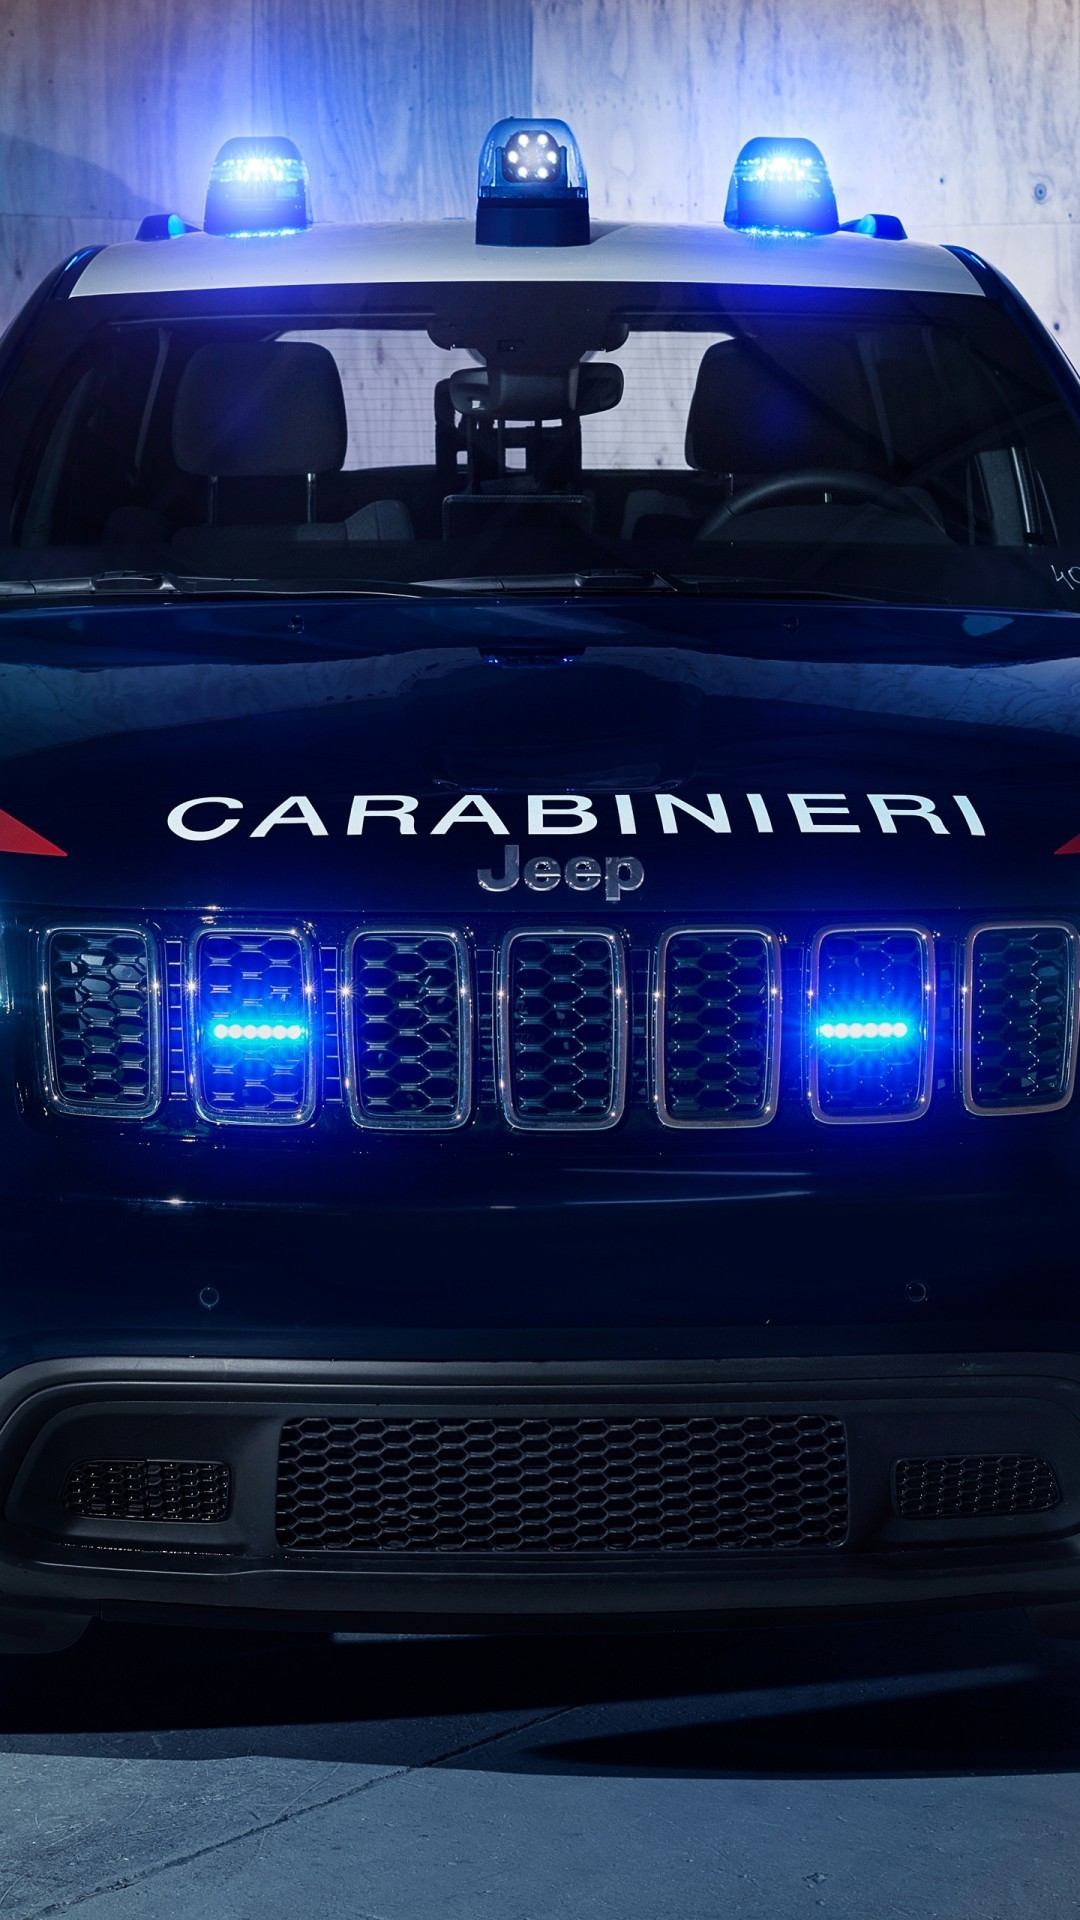 Jeep Grand Cherokee Carabinieri, Front View, Suv Police - Carabinieri Wallpaper Hd - HD Wallpaper 